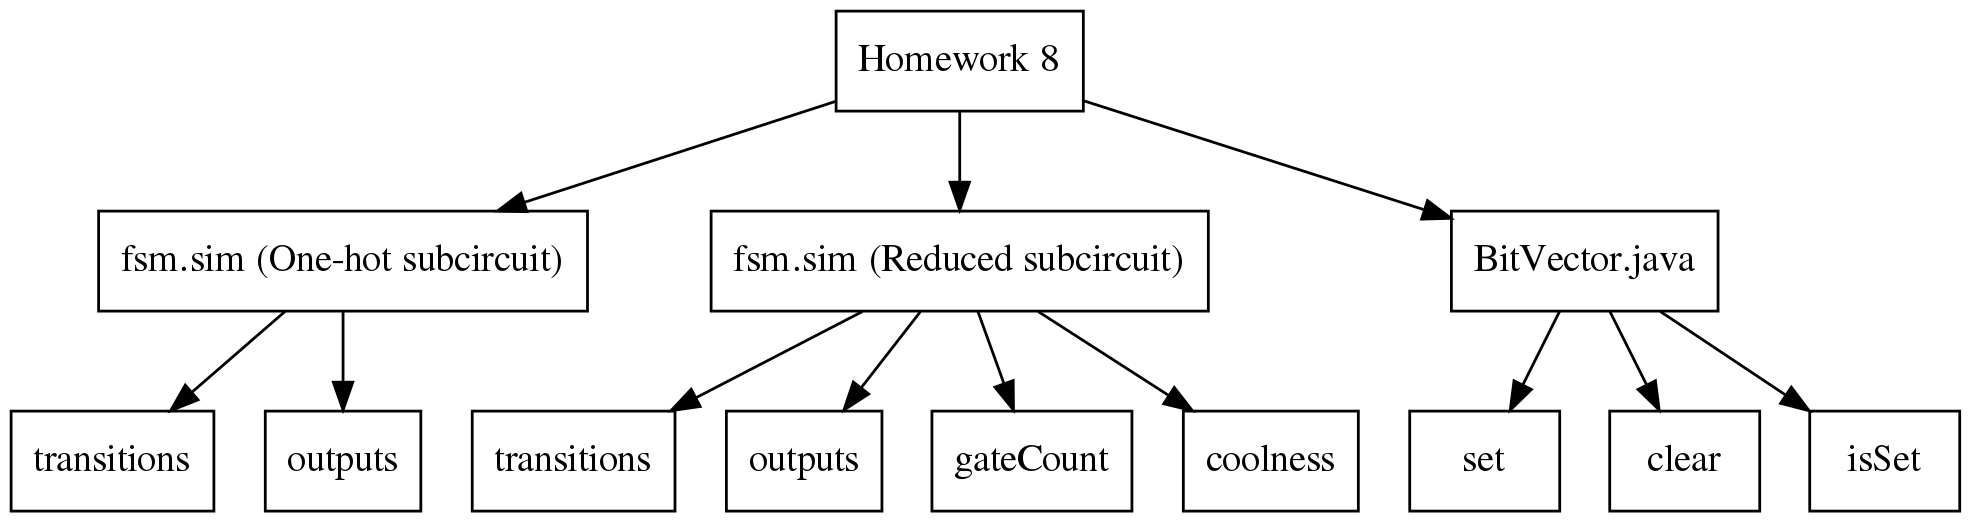 digraph {
 dpi=200
 ordering=out

 a  [shape=box, label="Homework 8"]

 c1 [shape=box, label="fsm.sim (One-hot subcircuit)"]
 p1 [shape=box, label="transitions"]
 p2 [shape=box, label="outputs"]

 c2 [shape=box, label="fsm.sim (Reduced subcircuit)"]
 p3 [shape=box, label="transitions"]
 p4 [shape=box, label="outputs"]
 p5 [shape=box, label="gateCount"]
 p6 [shape=box, label="coolness"]

 c3 [shape=box, label="BitVector.java"]
 p7 [shape=box, label="set"]
 p8 [shape=box, label="clear"]
 p9 [shape=box, label="isSet"]

 a  -> c1
 c1 -> p1
 c1 -> p2

 a  -> c2
 c2 -> p3
 c2 -> p4
 c2 -> p5
 c2 -> p6

 a  -> c3
 c3 -> p7
 c3 -> p8
 c3 -> p9
}